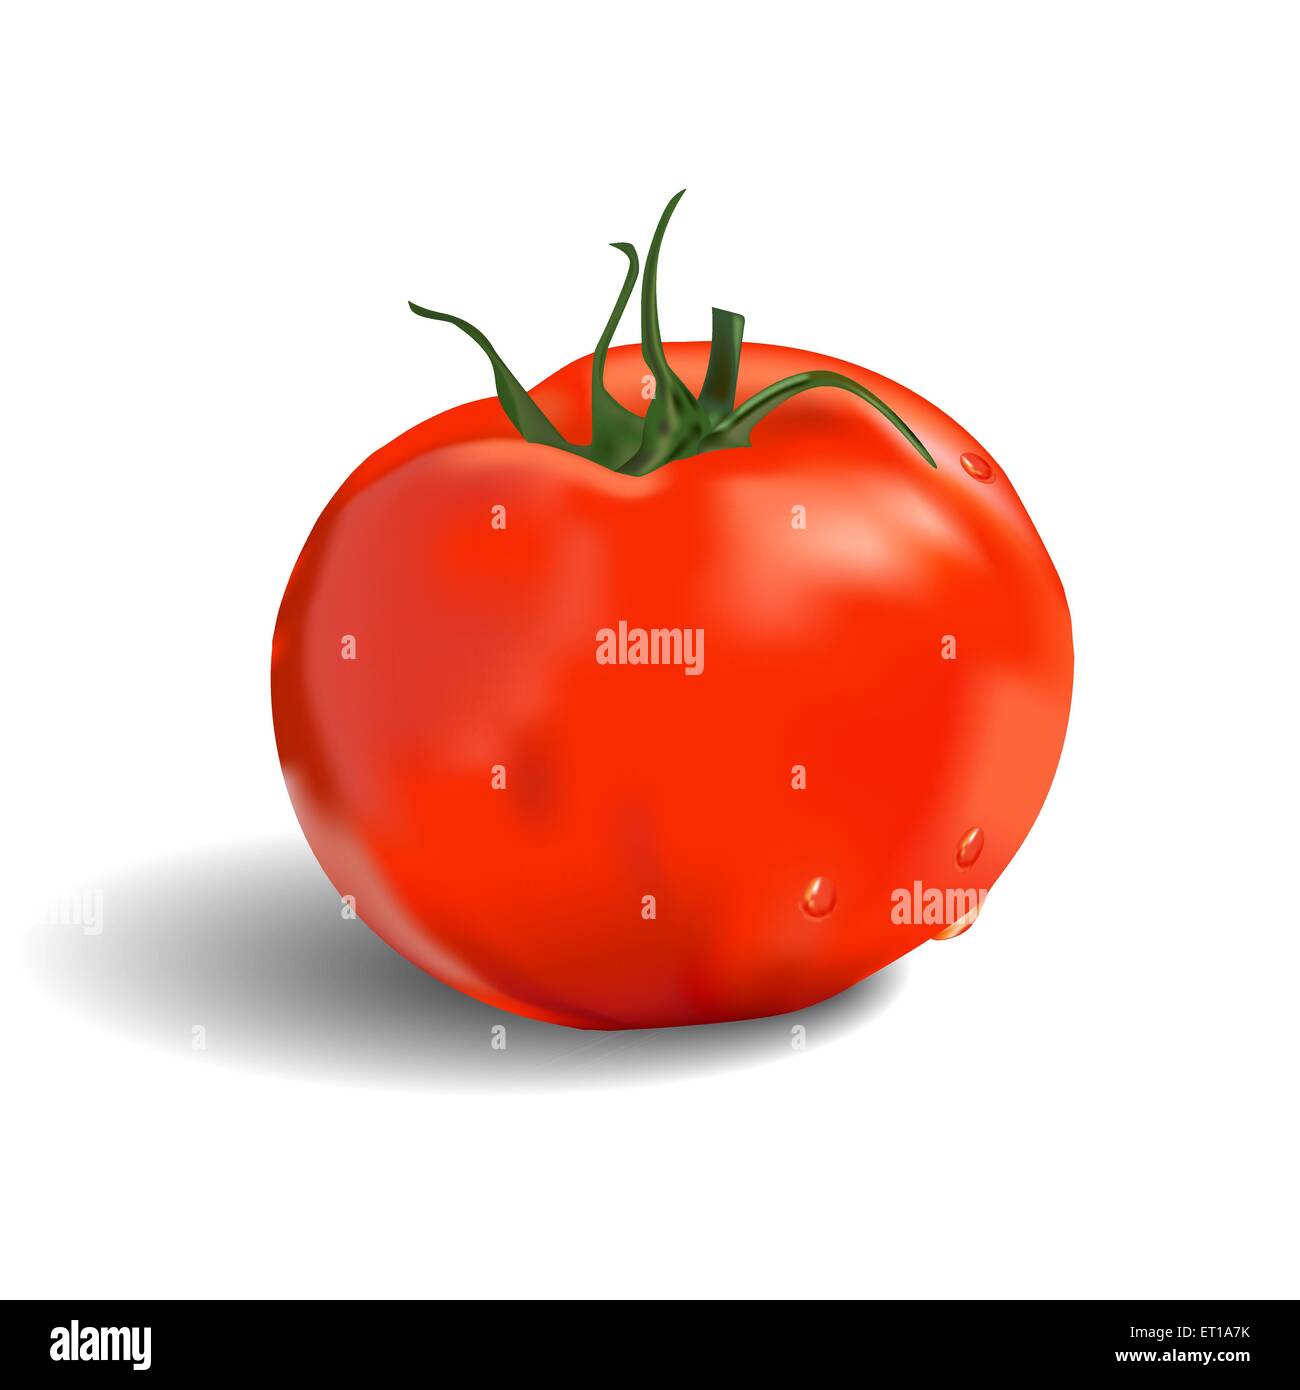 Isolierte rote Tomate mit grünen Blättern - Vektor-Illustration Stock Vektor